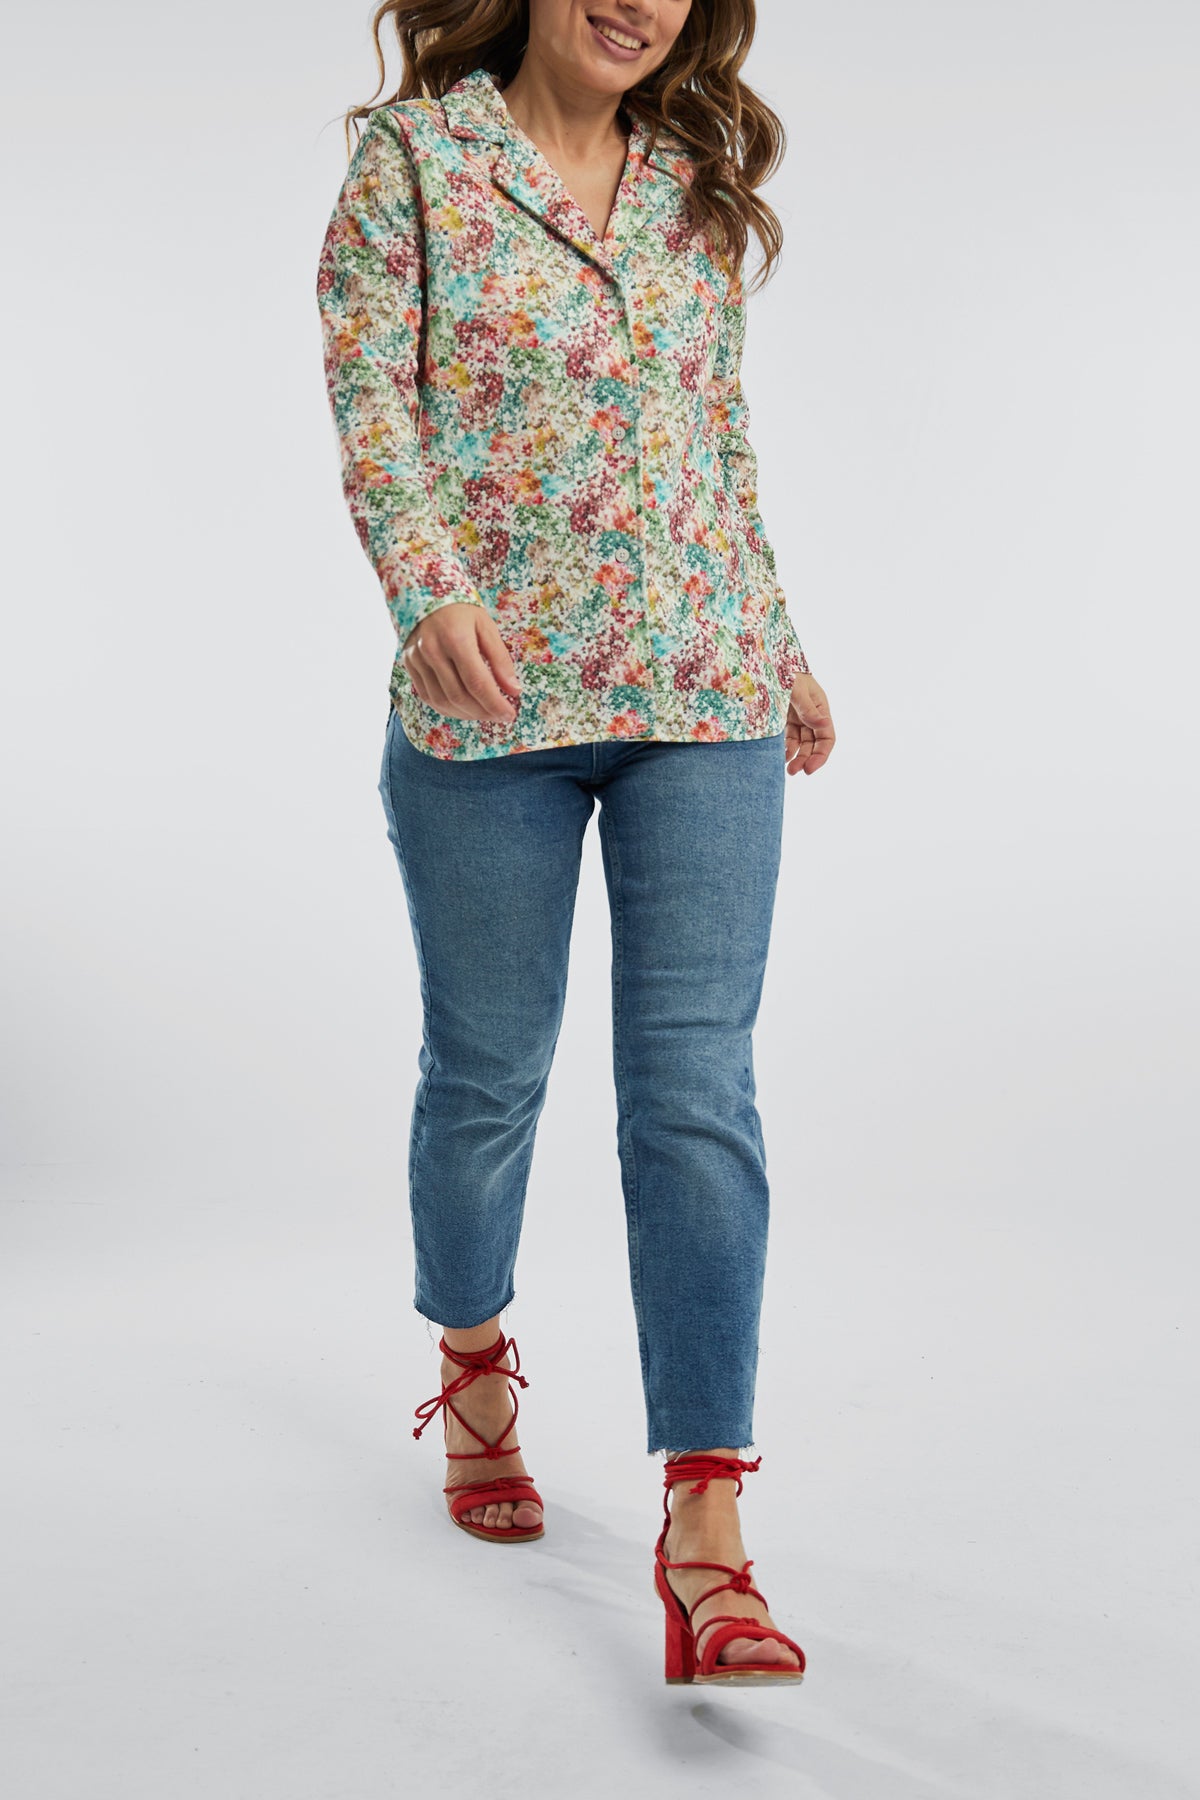 Camisa bowling de flores para mujer sin arrugas ni manchas. Manga larga, antiarrugas y antimanchas. Foto cuerpo entero